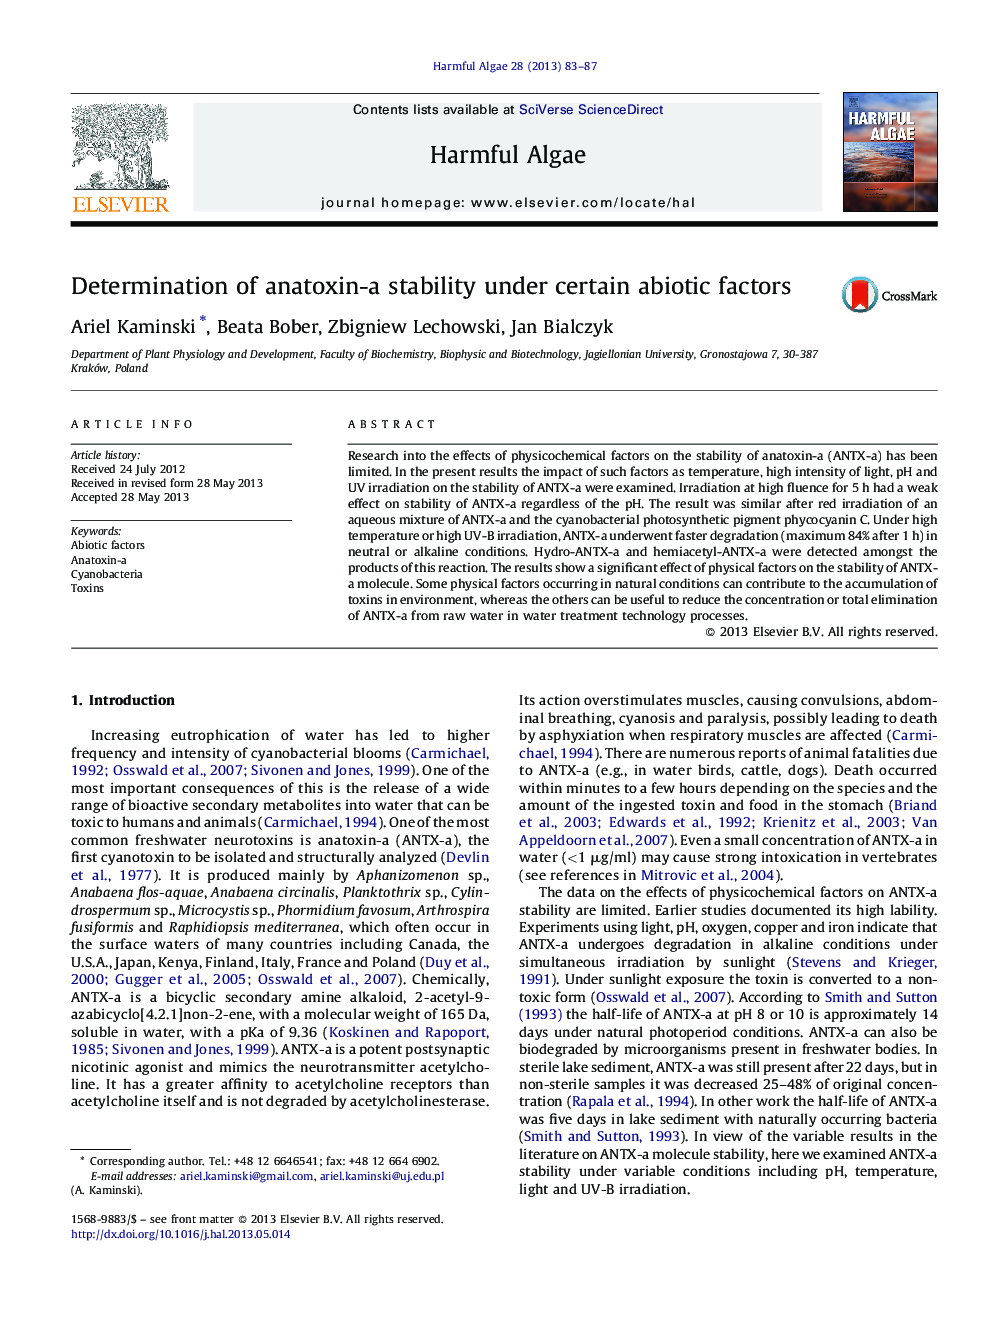 Determination of anatoxin-a stability under certain abiotic factors